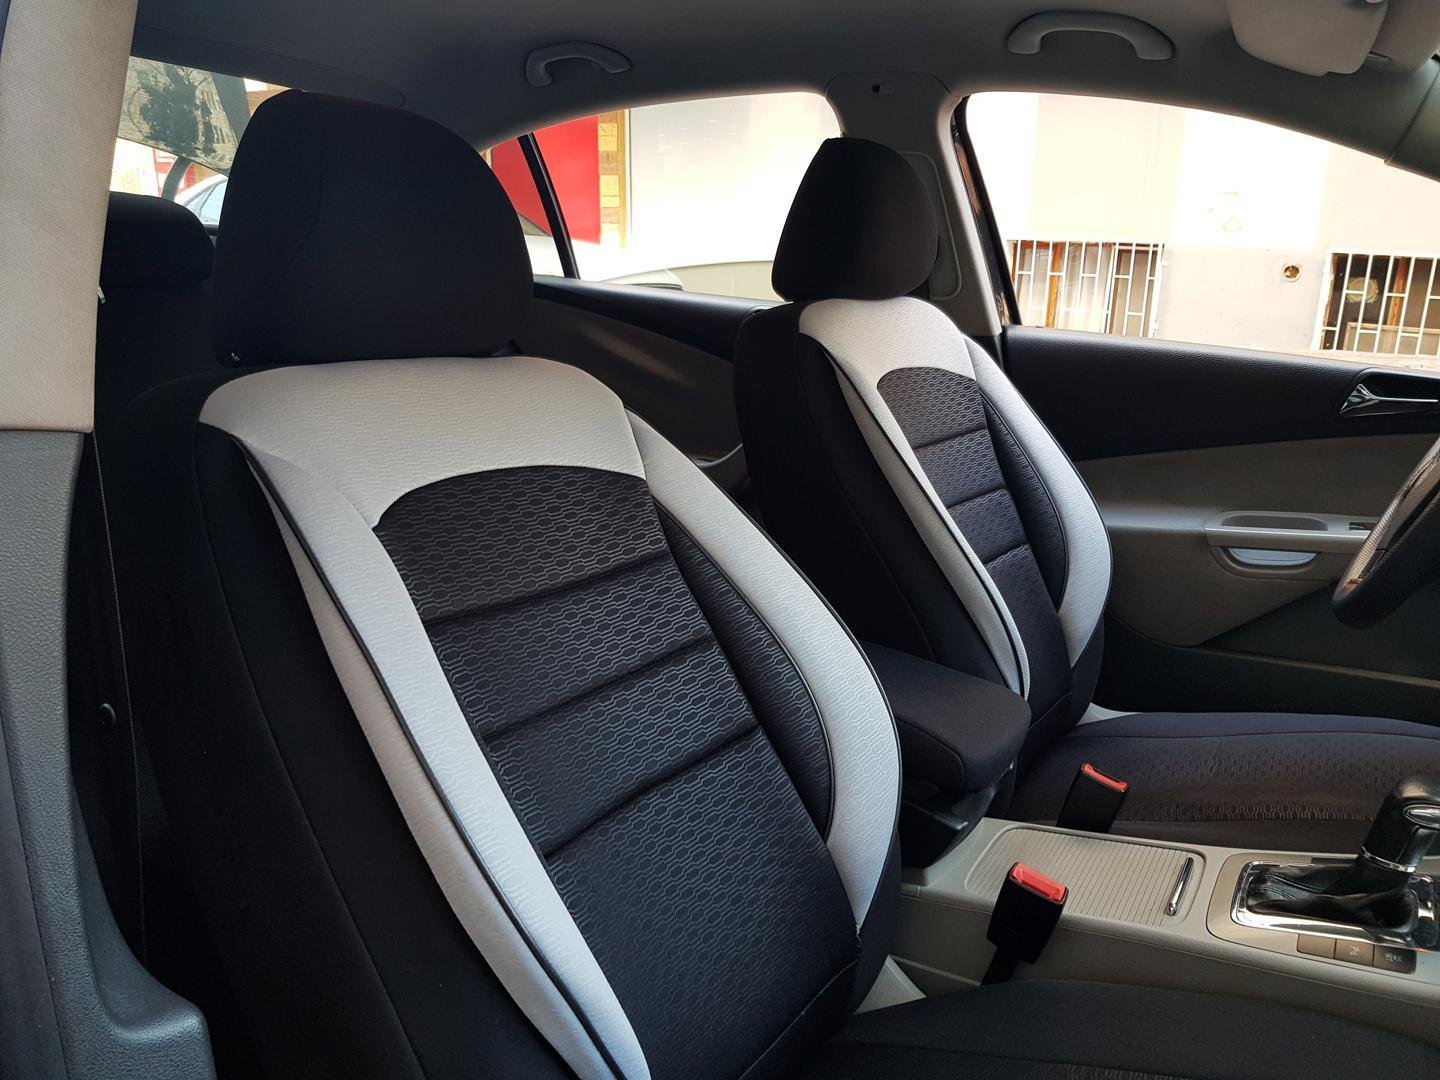 VAUXHALL Luxury LEATHERETTE CAR SEAT COVERS Protectors ASTRA CORSA ADAM ANTARA